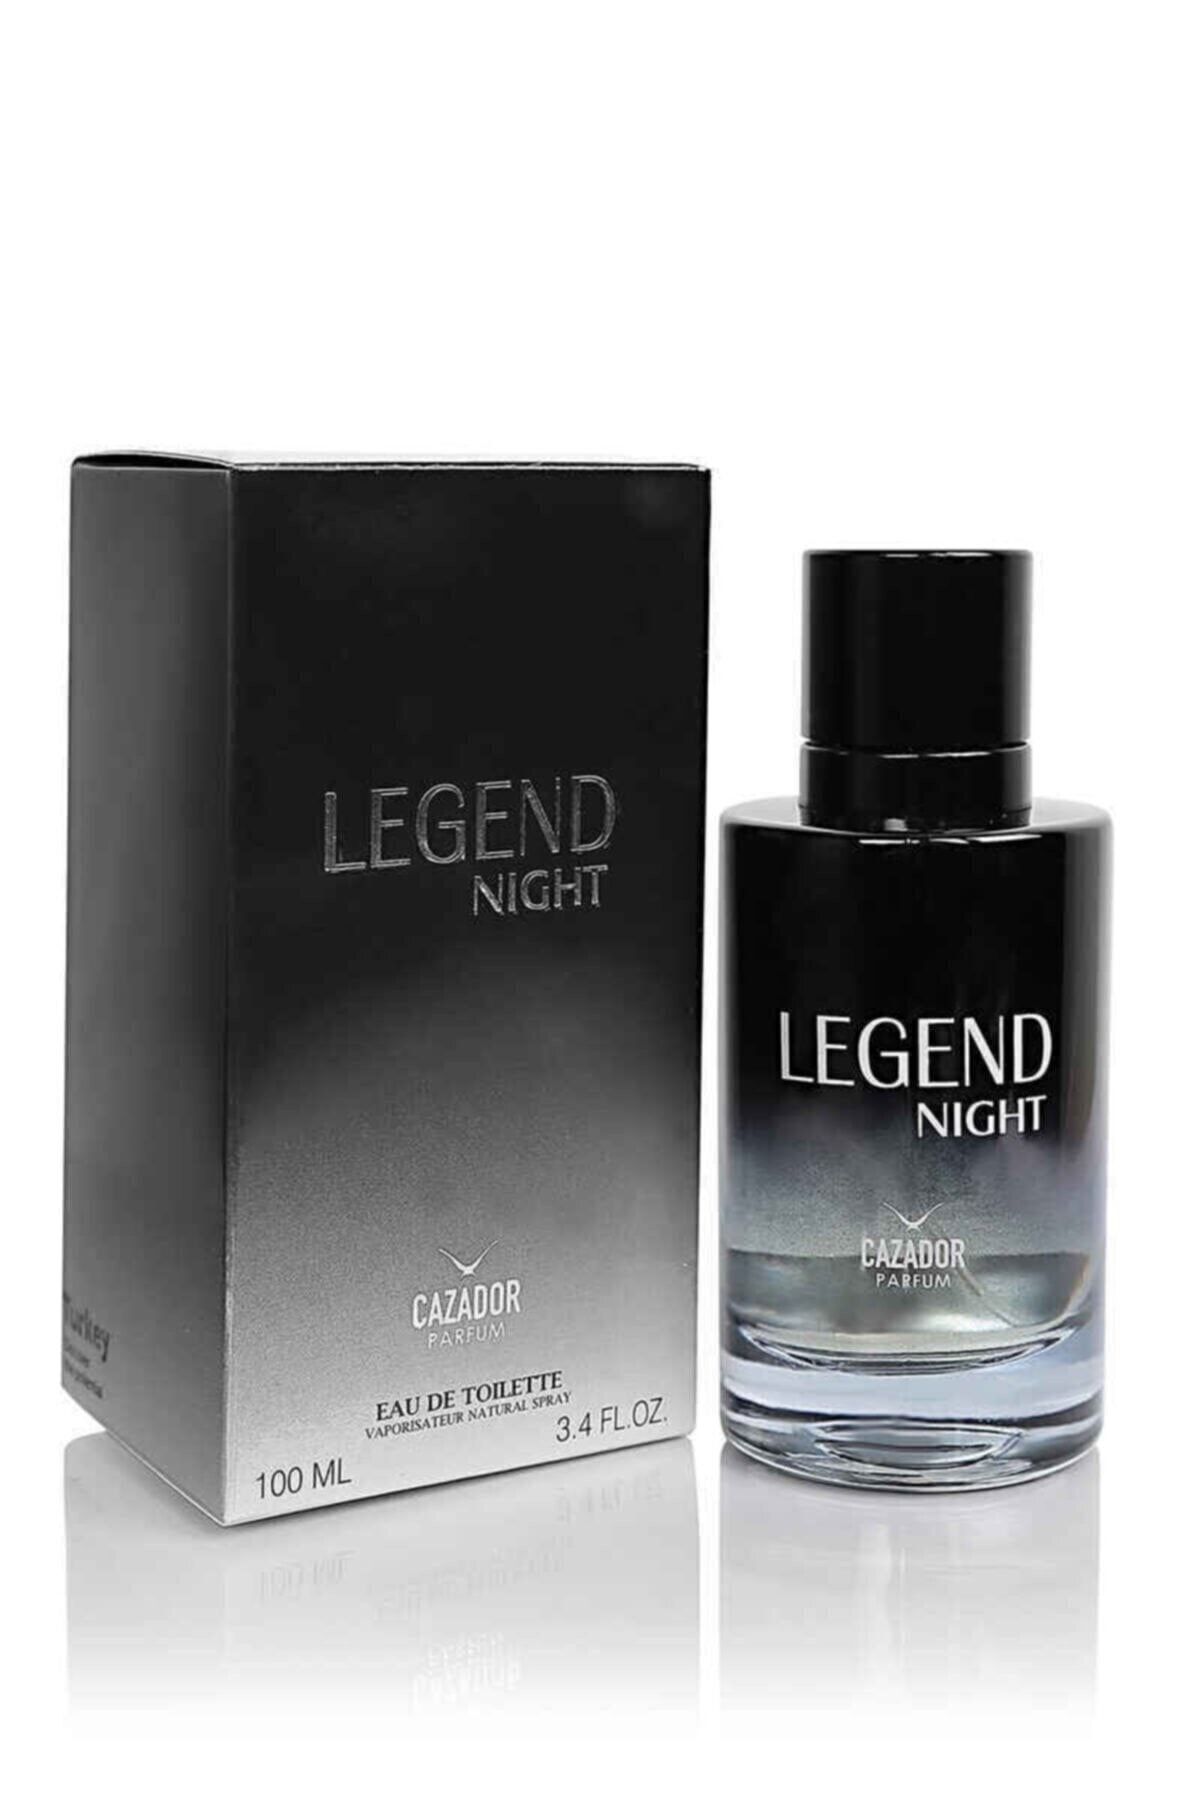 Cazador Caz 9563 Legend Parfum 100cl Legend